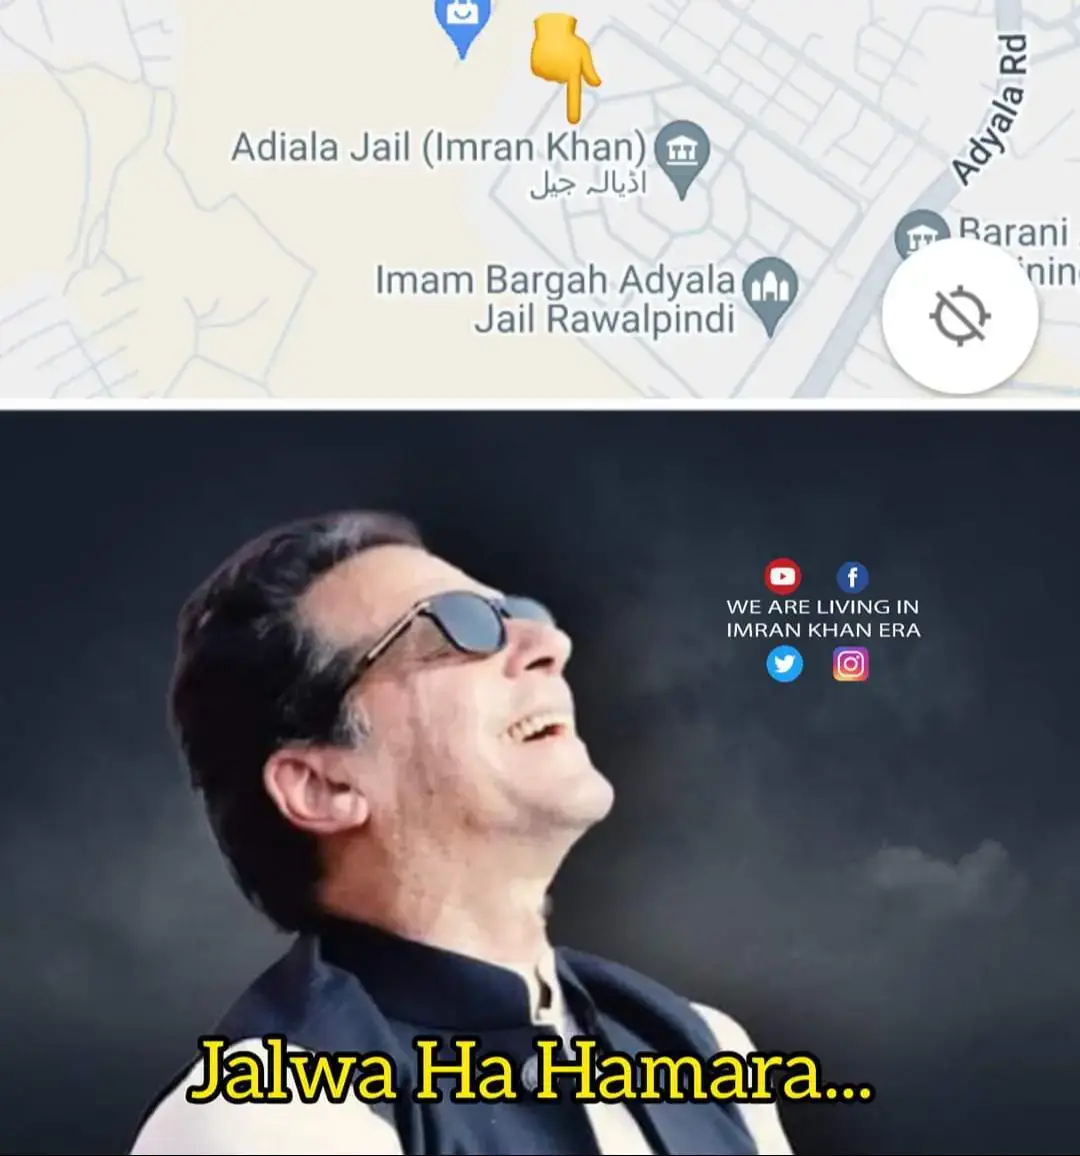 Goggle Maps Shows Adiala Jail with Imran khan name 👑☑#viraltiktok 